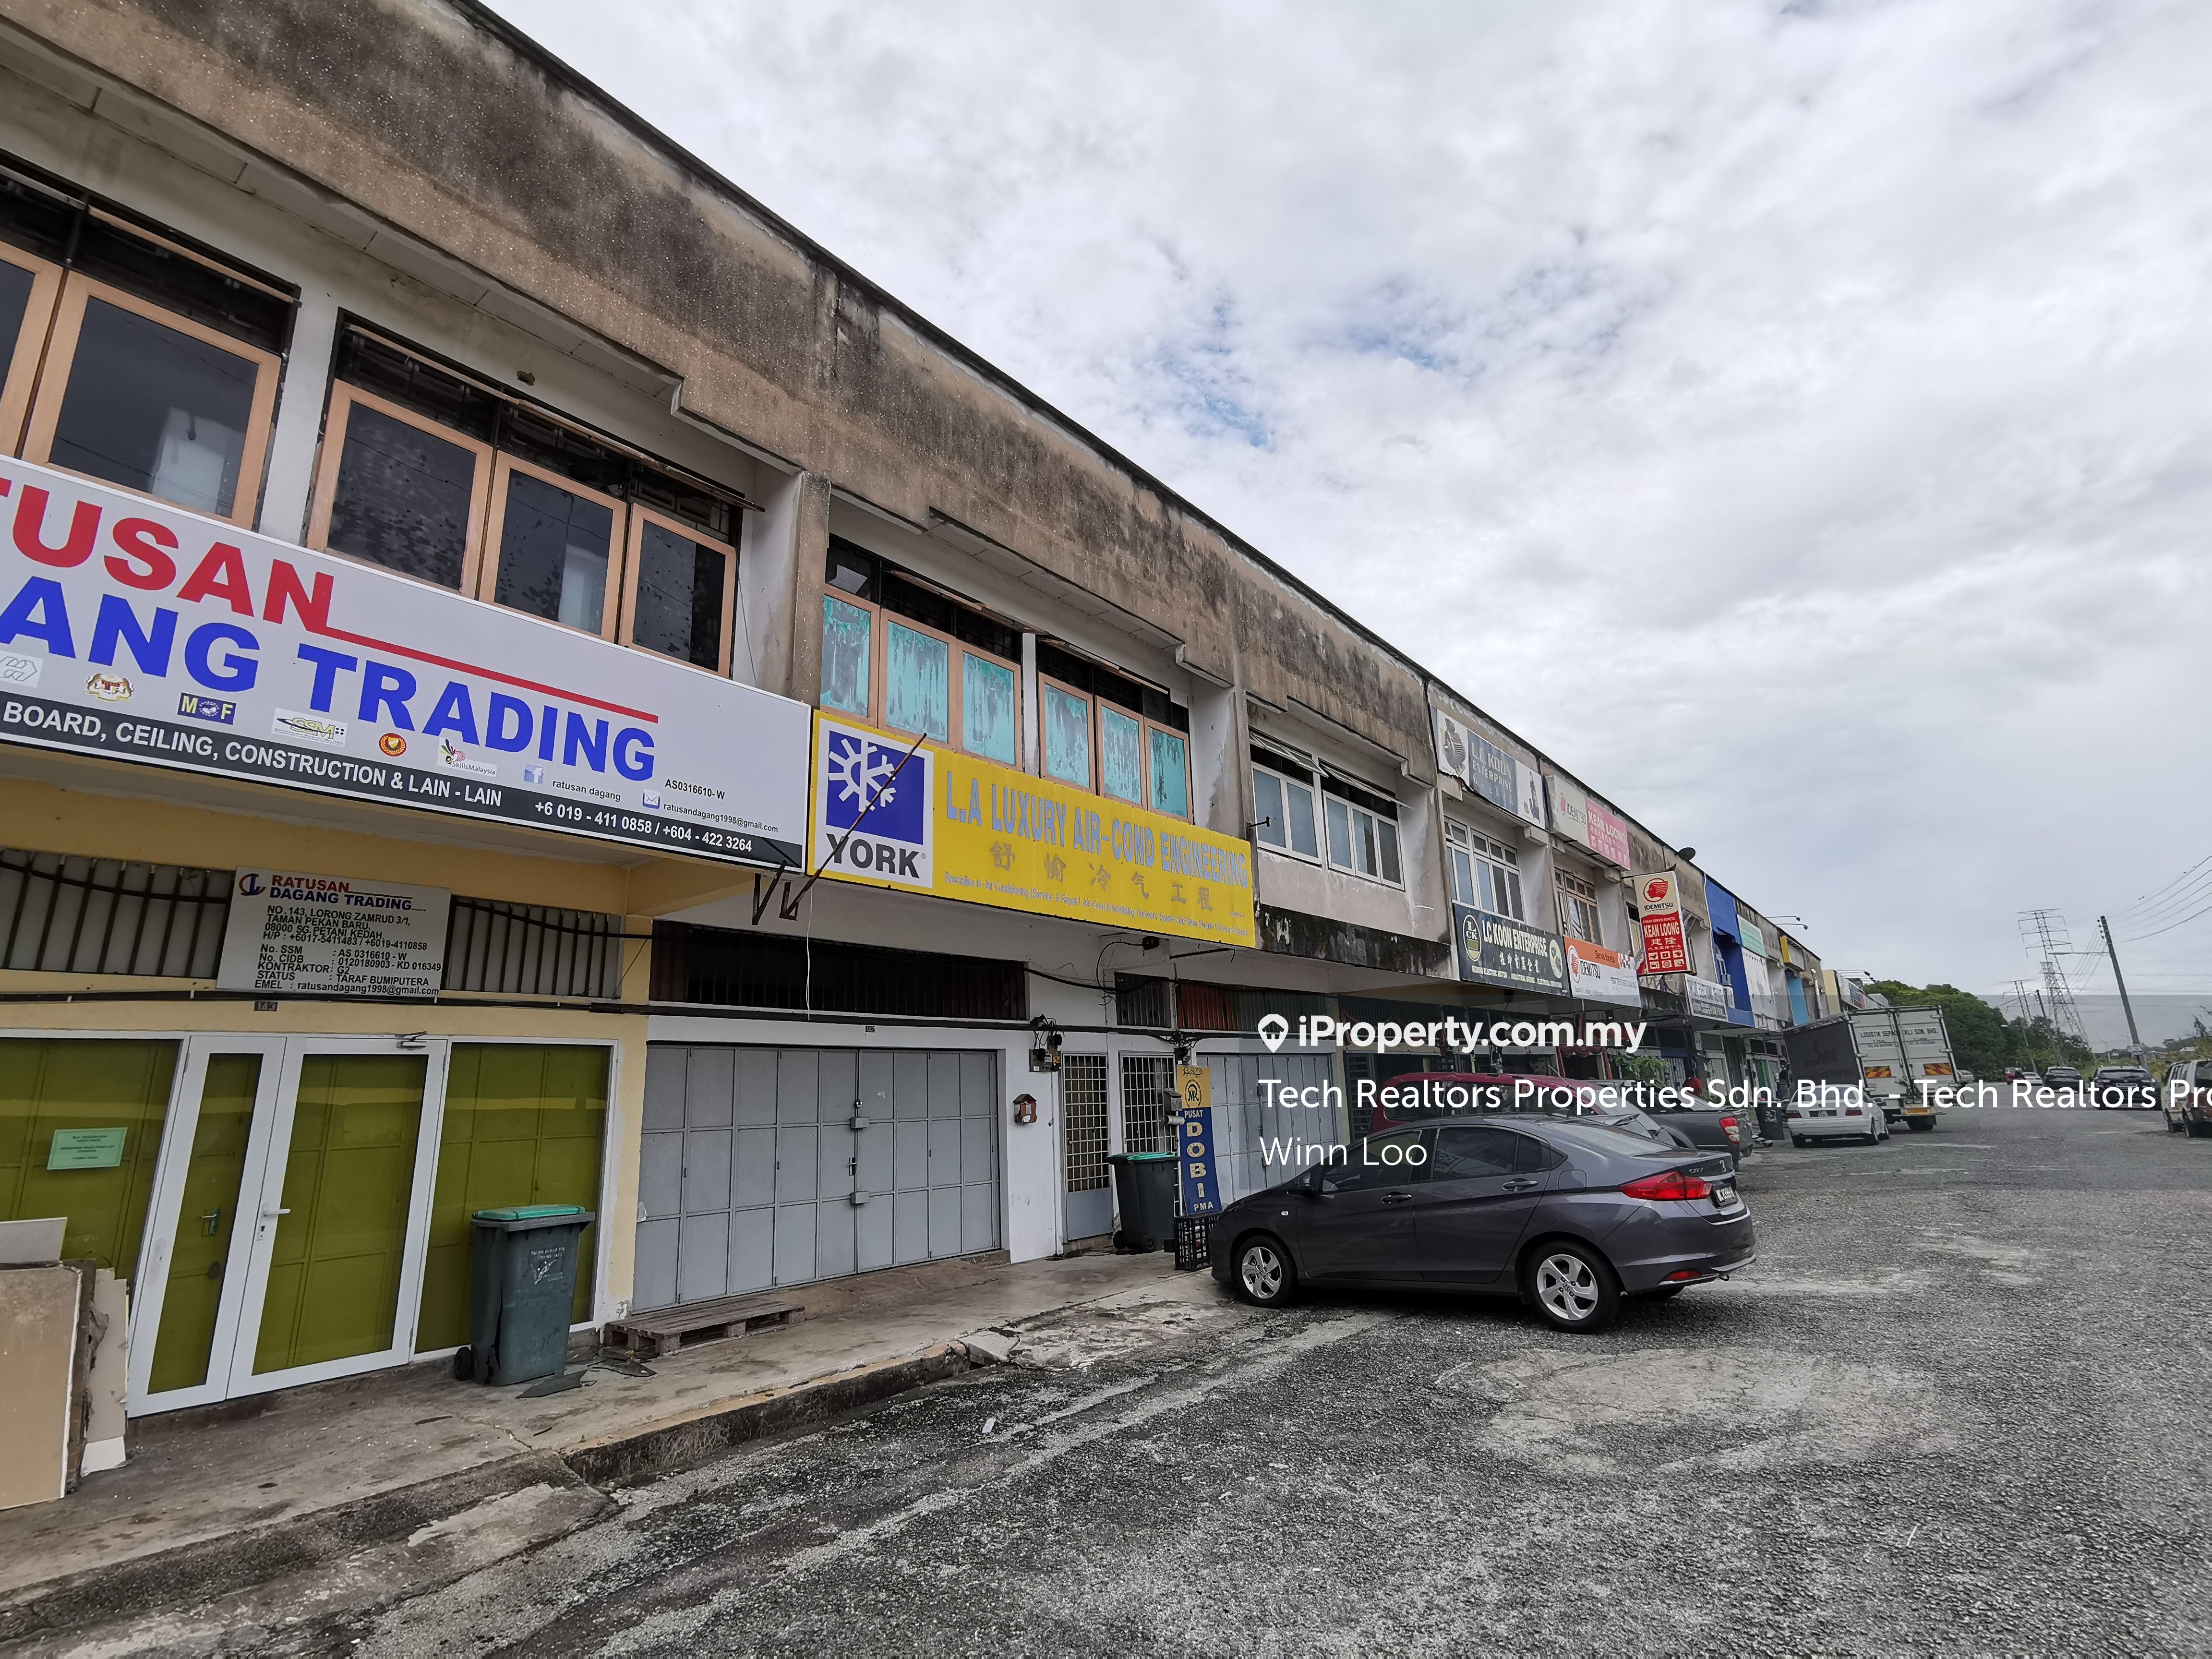 Pekan Baru Taman Pekan Baru Shop Lot Sungai Petani Intermediate Shop Office For Rent Iproperty Com My